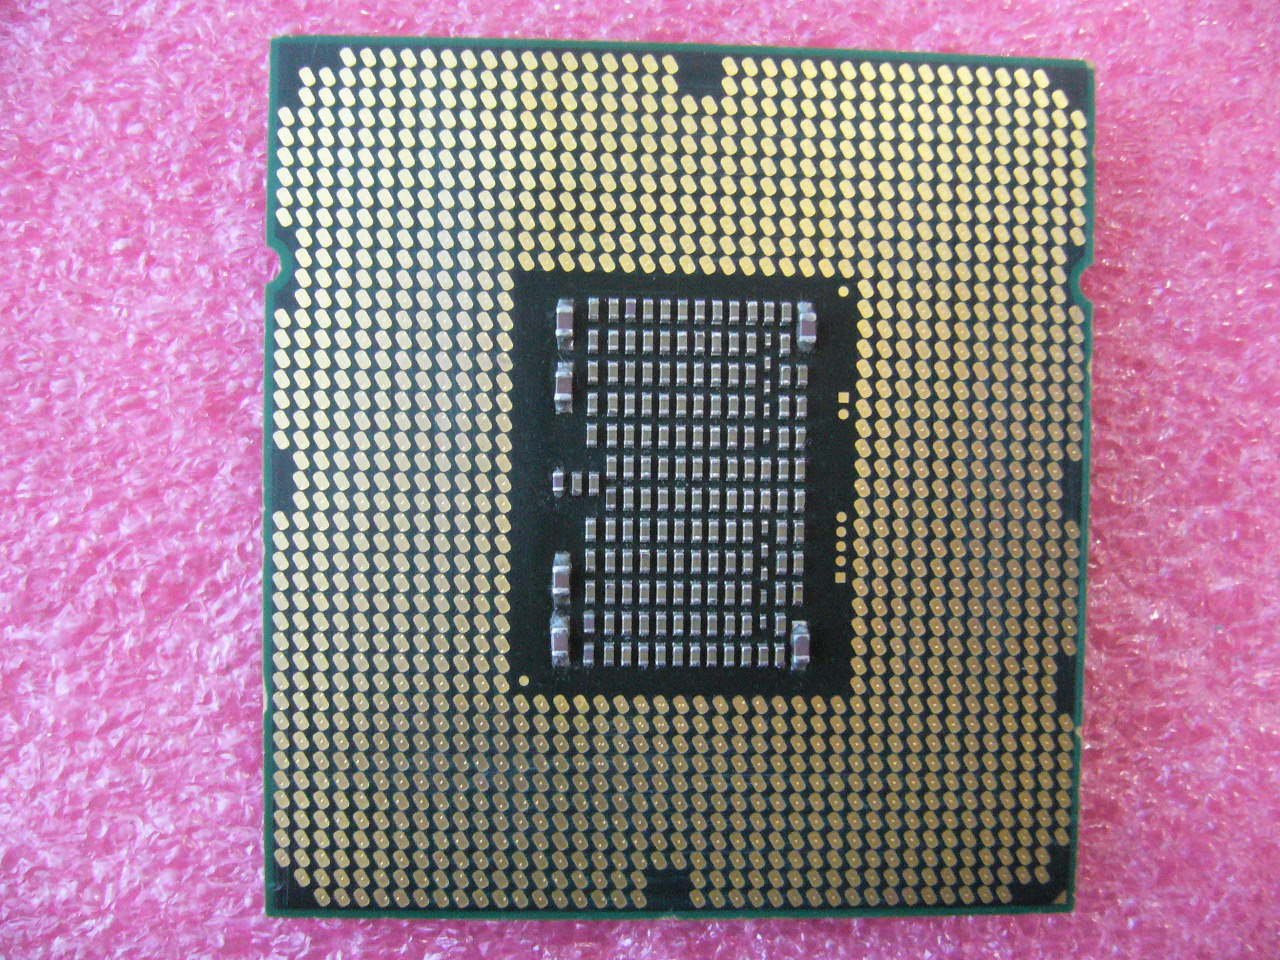 QTY 1x INTEL Six-Cores Xeon CPU E5649 2.53GHZ/12MB LGA1366 SLBZ8 - zum Schließen ins Bild klicken